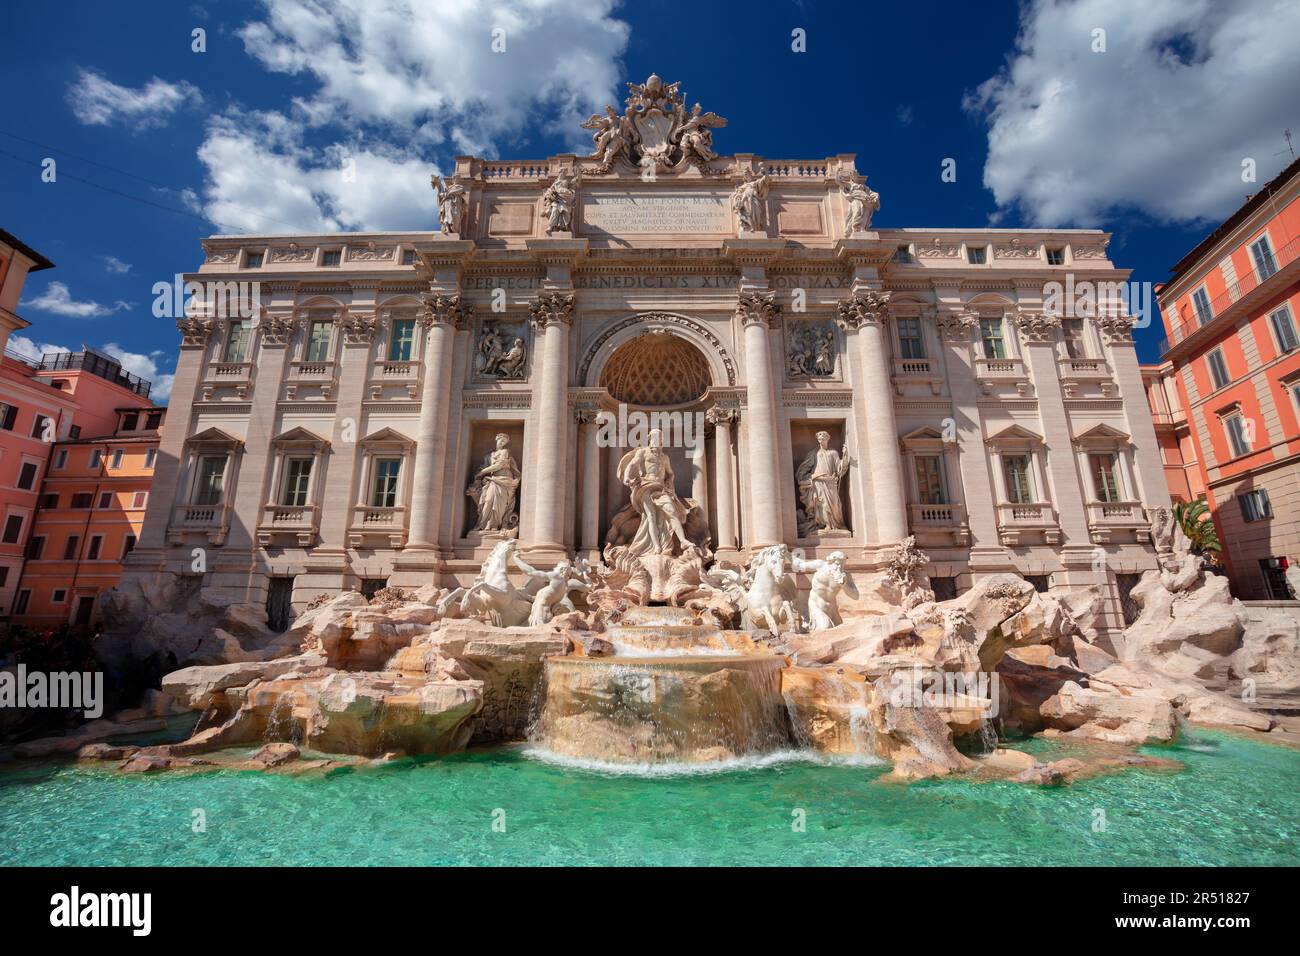 Trevi-Brunnen, Rom, Italien. Stadtbild von Rom, Italien mit dem berühmten Trevi-Brunnen an sonnigen Tagen. Stockfoto